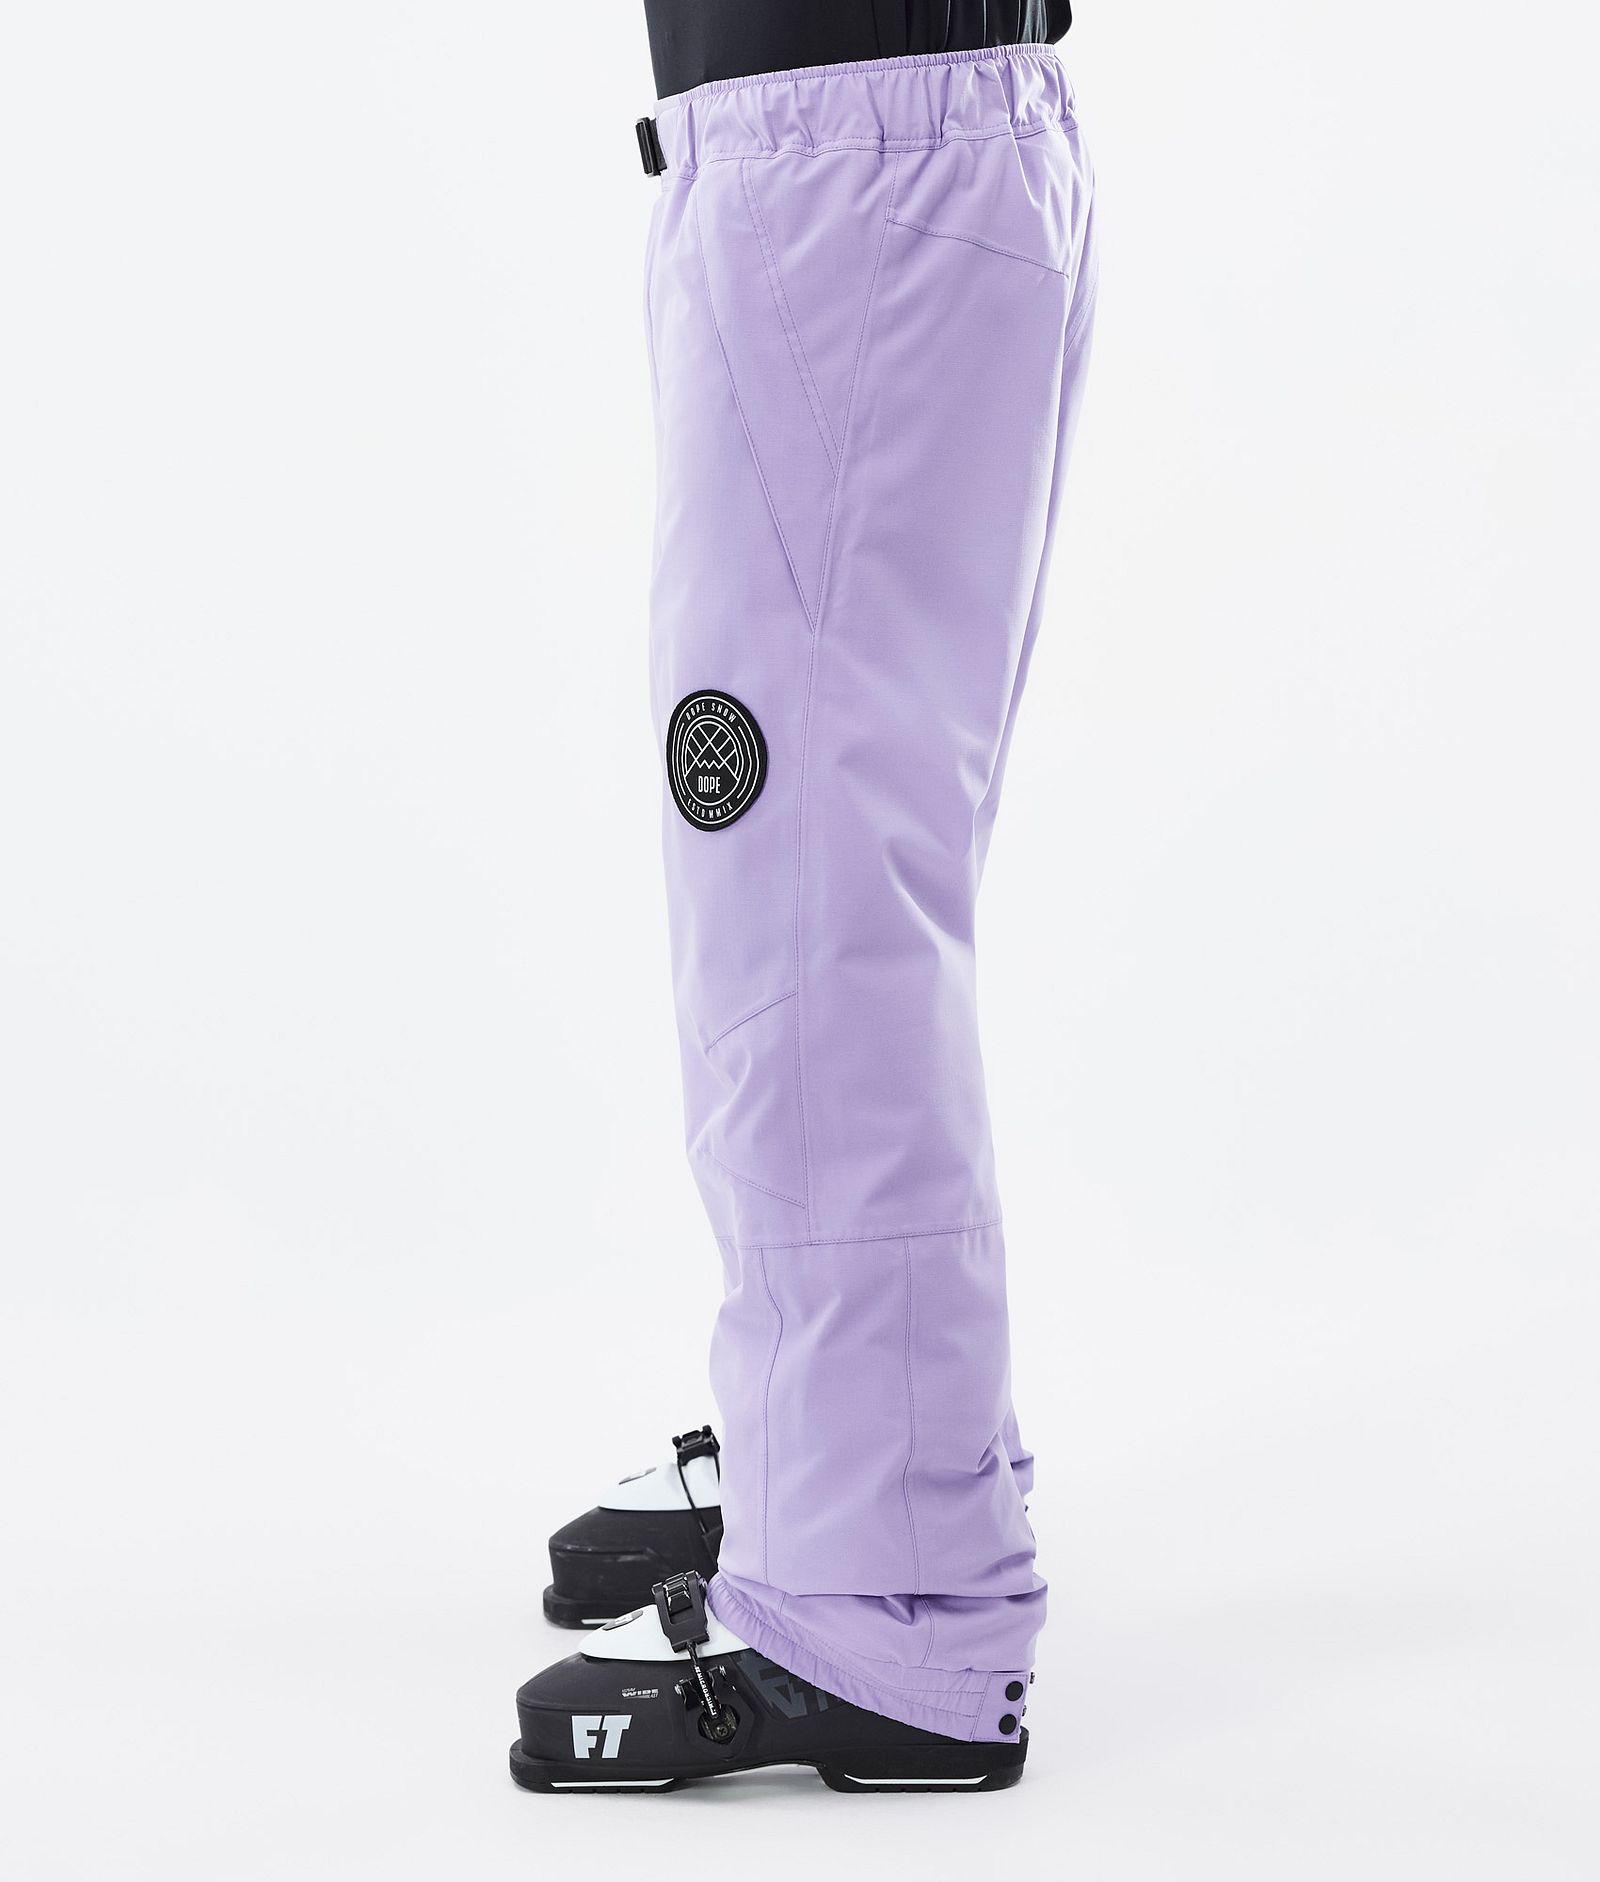 Blizzard 2022 Pantaloni Sci Uomo Faded violet